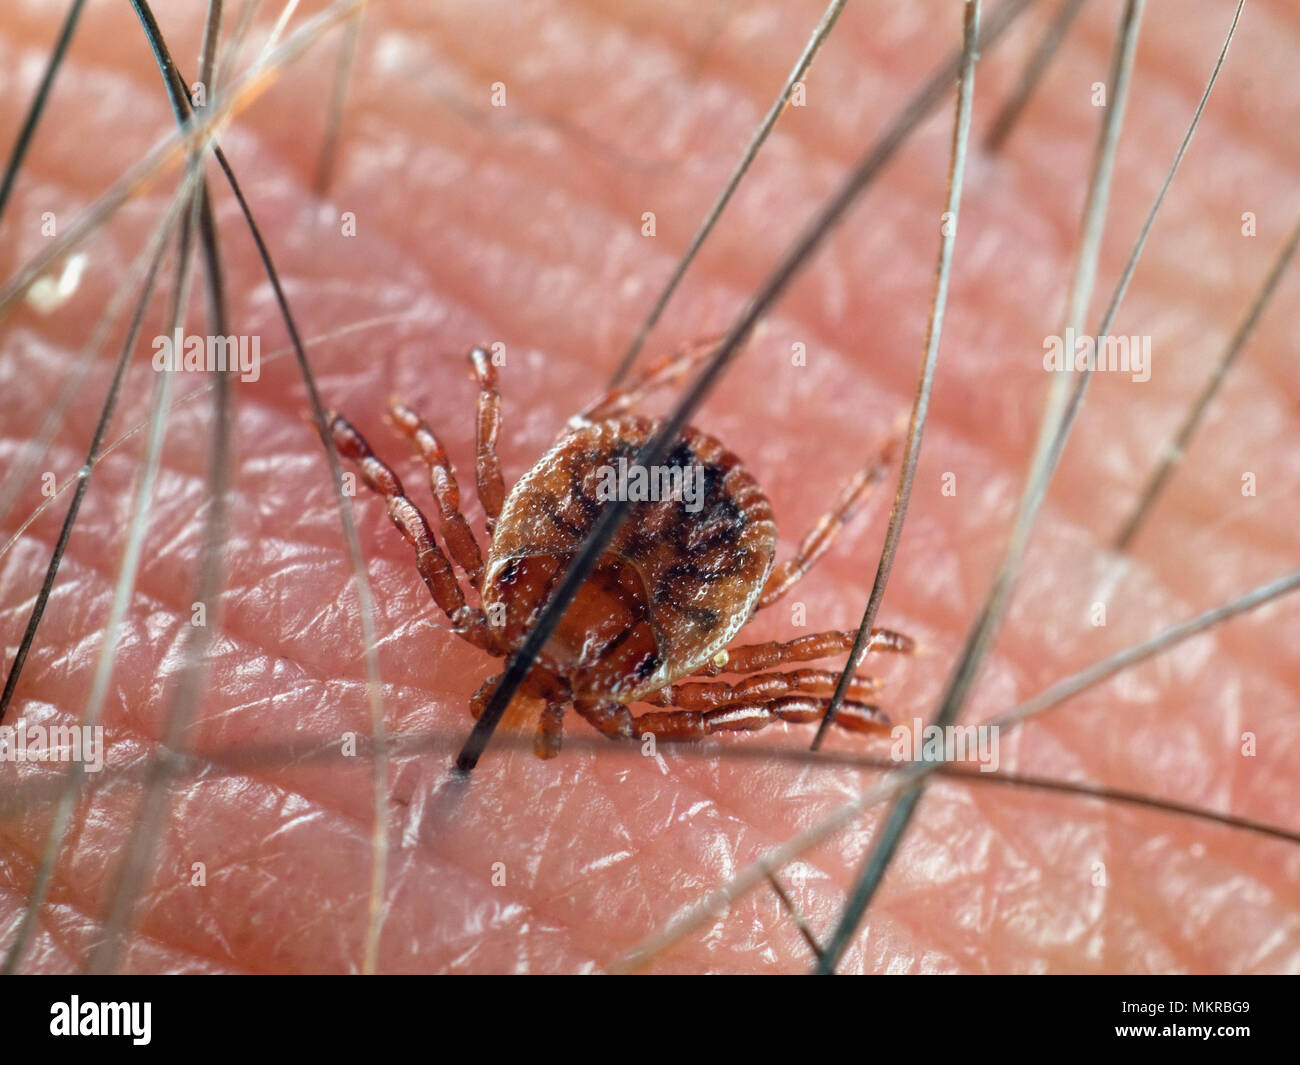 Amblyomma tick biting, lodged on human skin Stock Photo